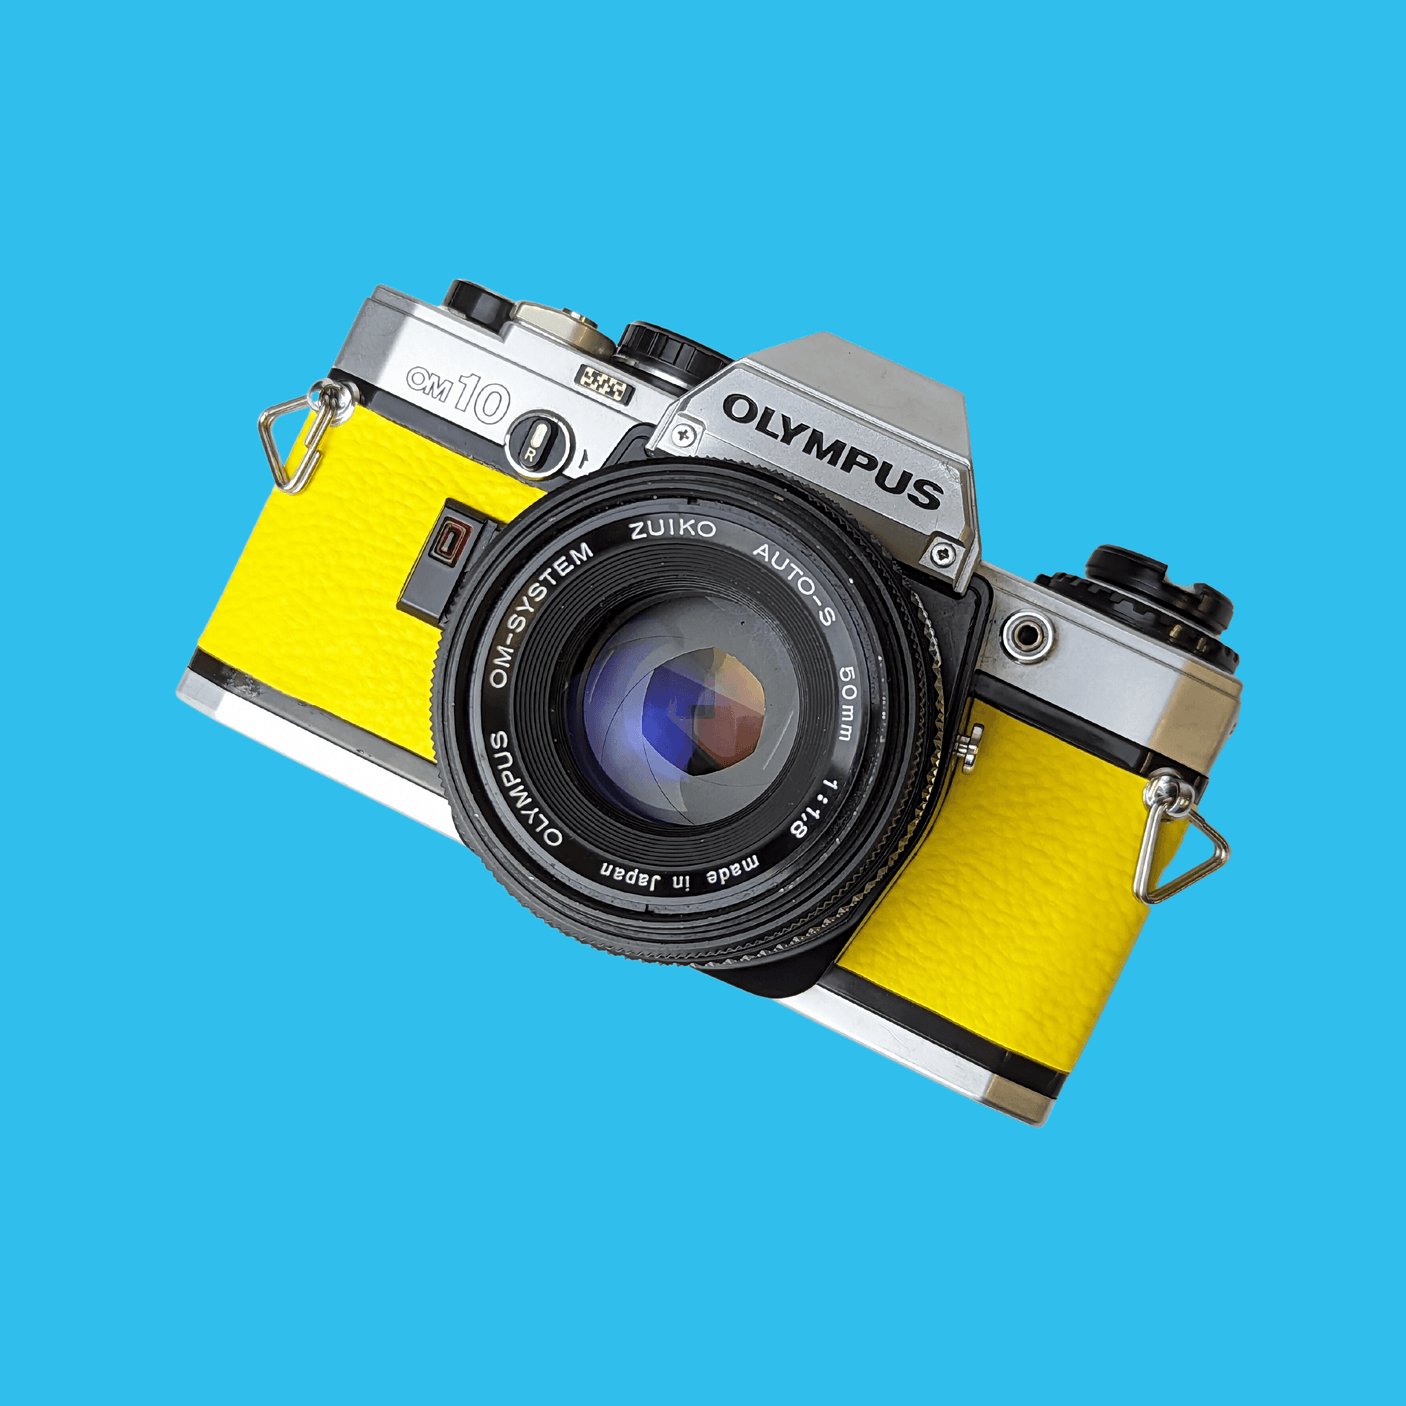 Olympus OM10 Yellow Leather Vintage 35mm Film Camera w/ F/1.8 50mm Lens